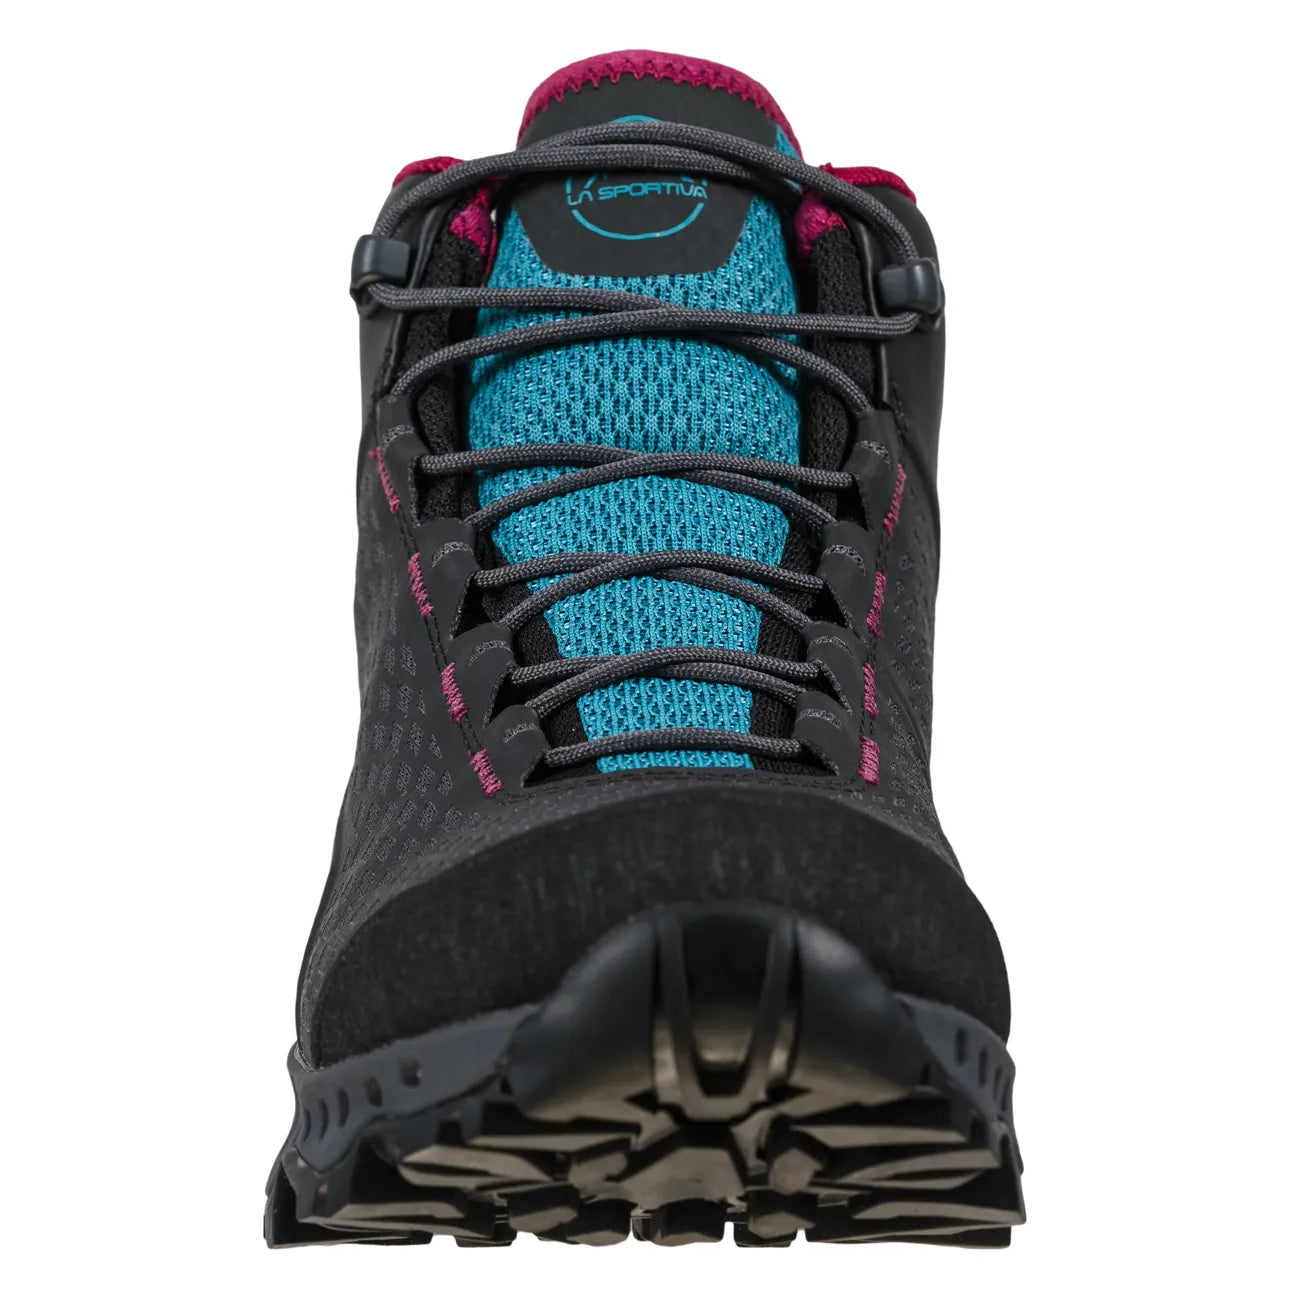 La Sportiva Stream GTX Mid Hiking Boot Women's - Find Your Feet Australia Hobart Launceston Tasmania